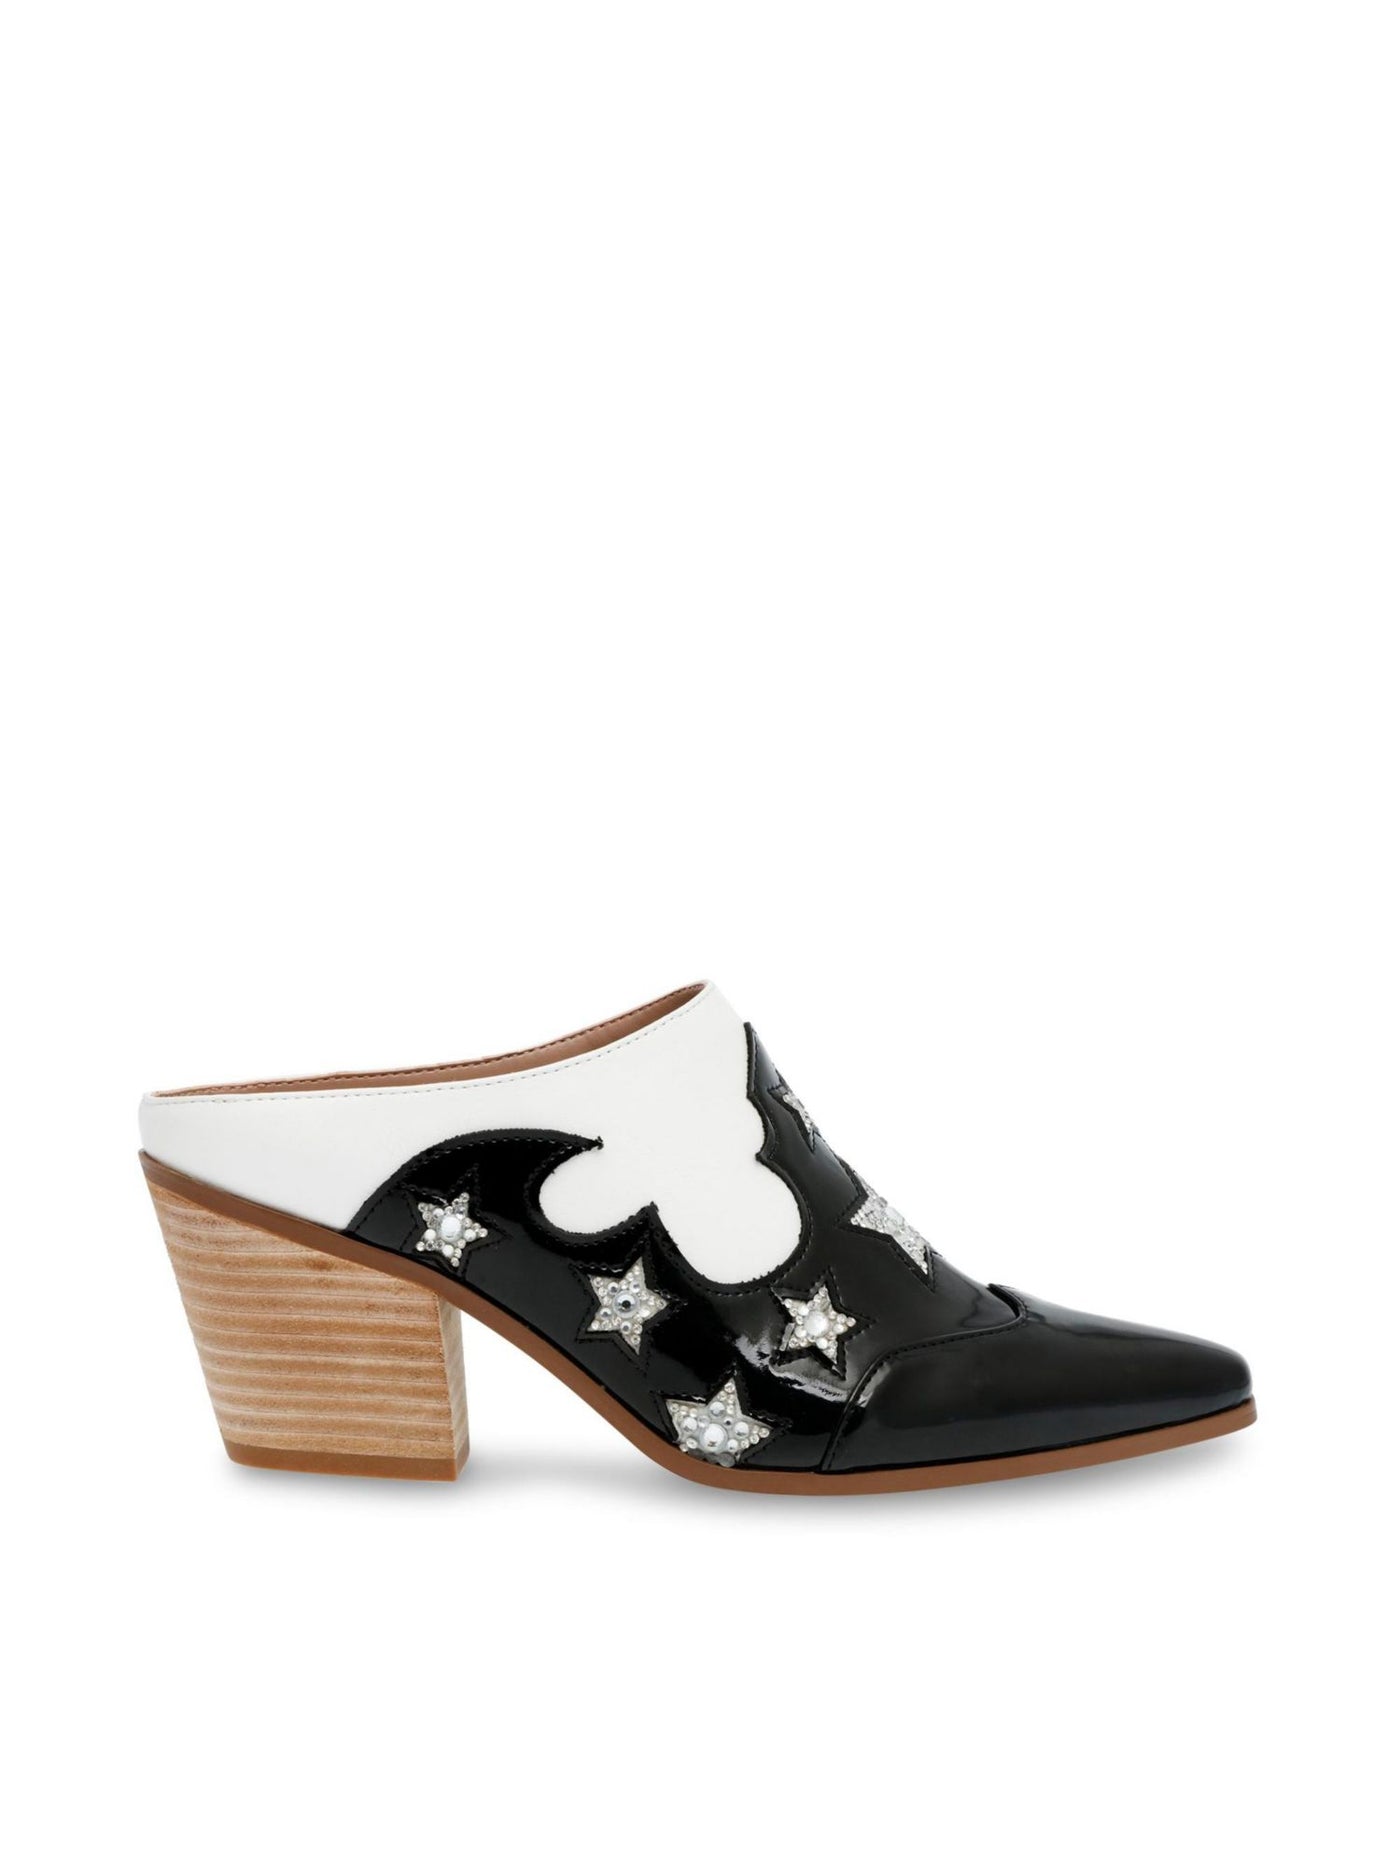 BETSEY JOHNSON Womens Black Color Block Western Embellished Padded Dennis Almond Toe Stacked Heel Slip On Heeled Mules Shoes 6 M